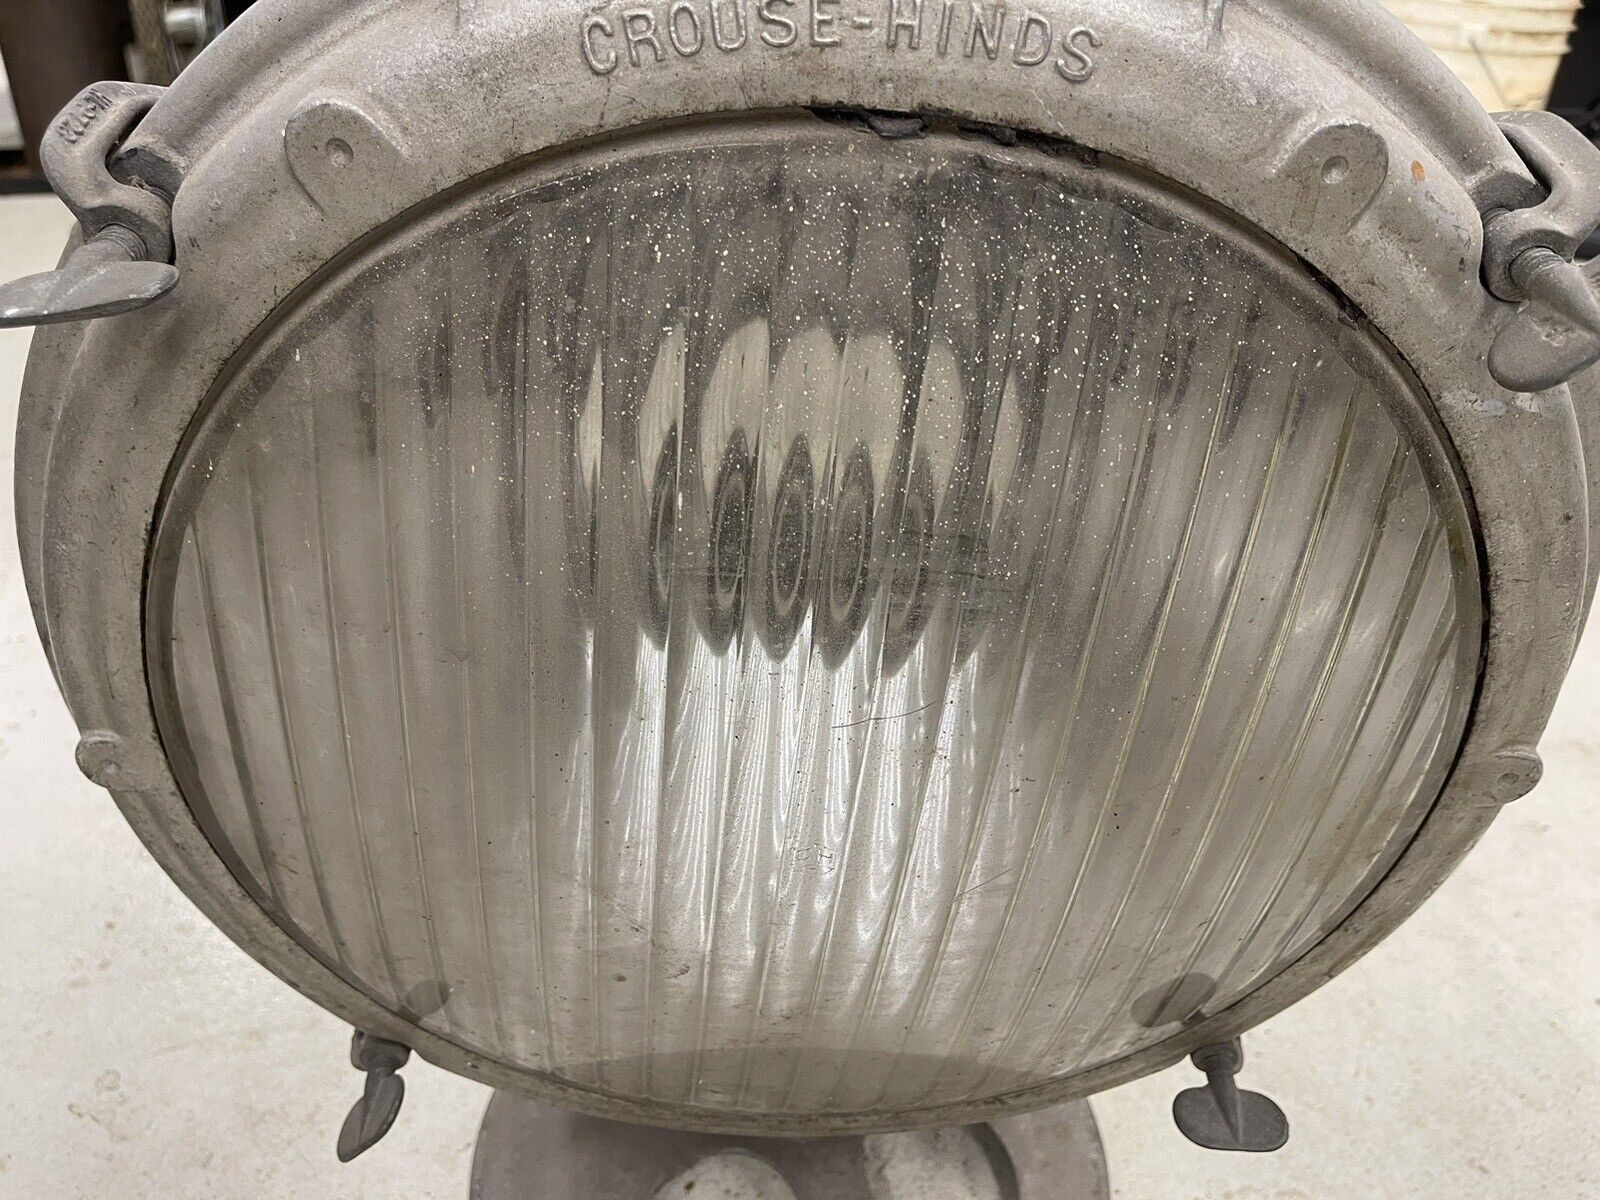 Vintage Crouse Hinds ADR 14 Spot Light - Firefighting Nautical Industrial Flood